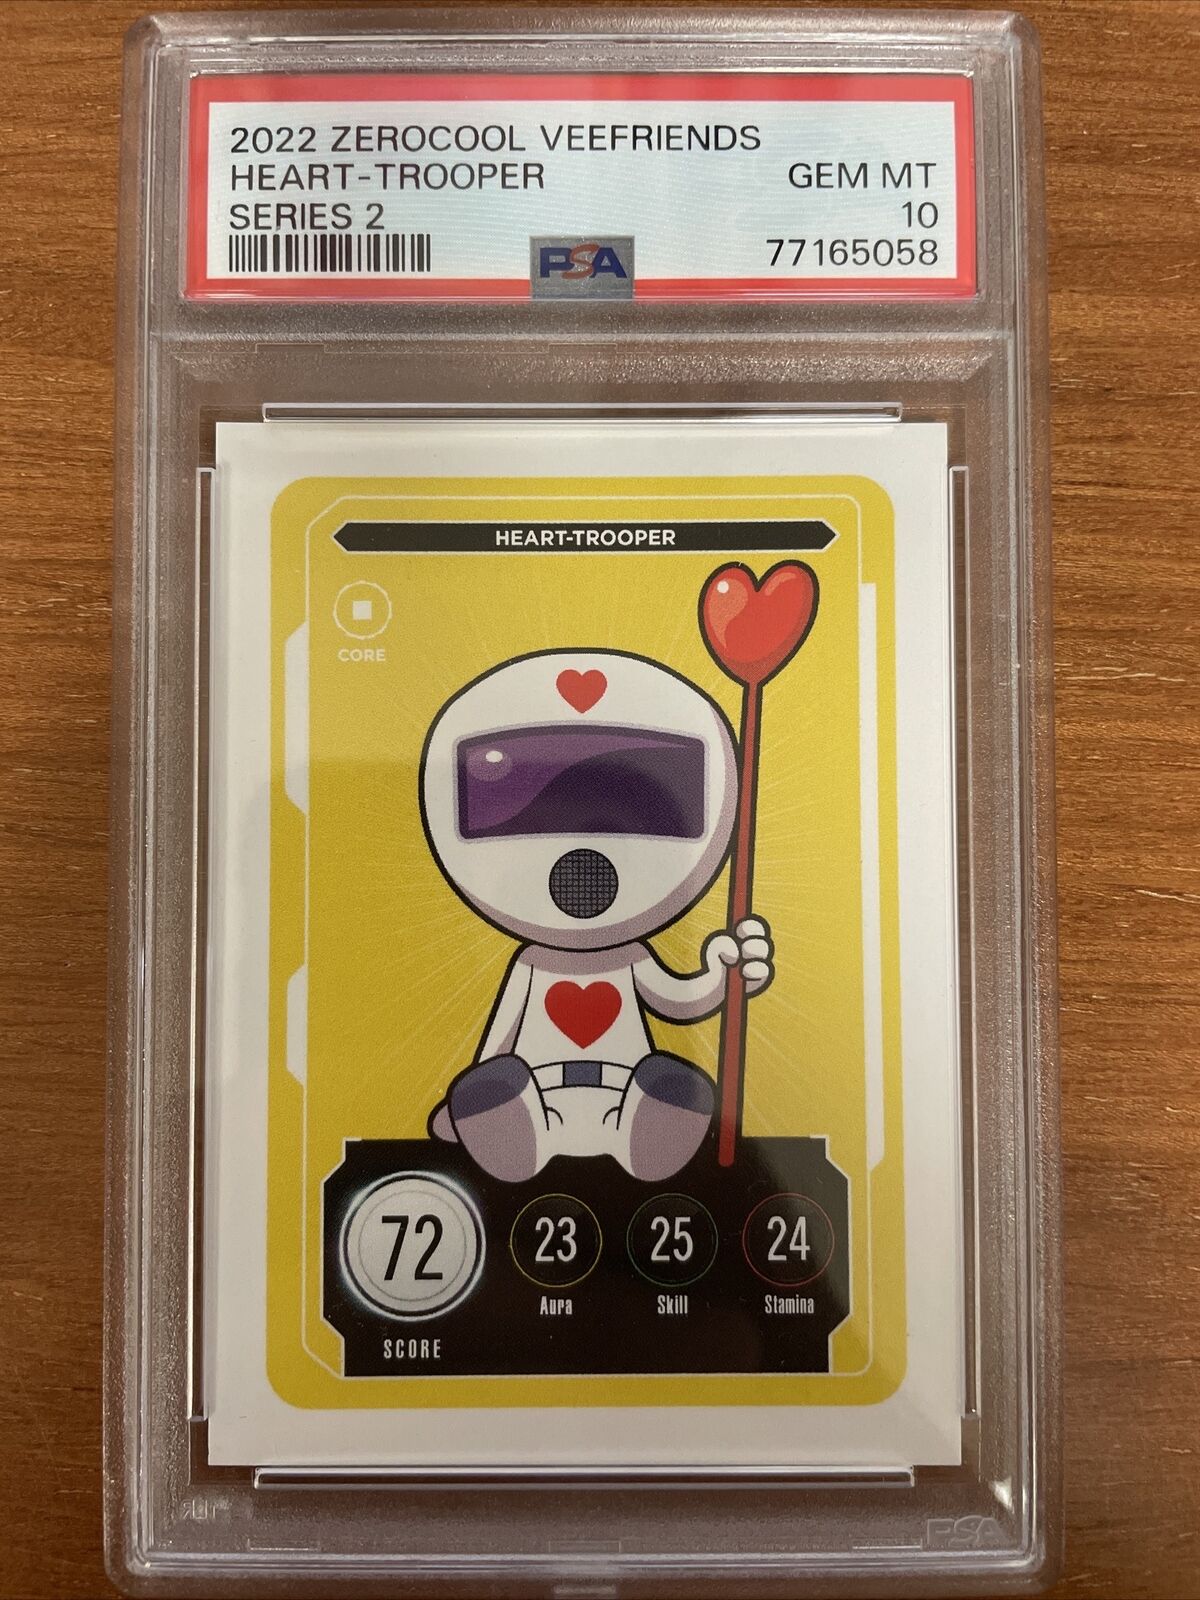 ZeroCool VeeFriends Compete And Collect Series 2 Heart-Trooper PSA 10 Gem Mint